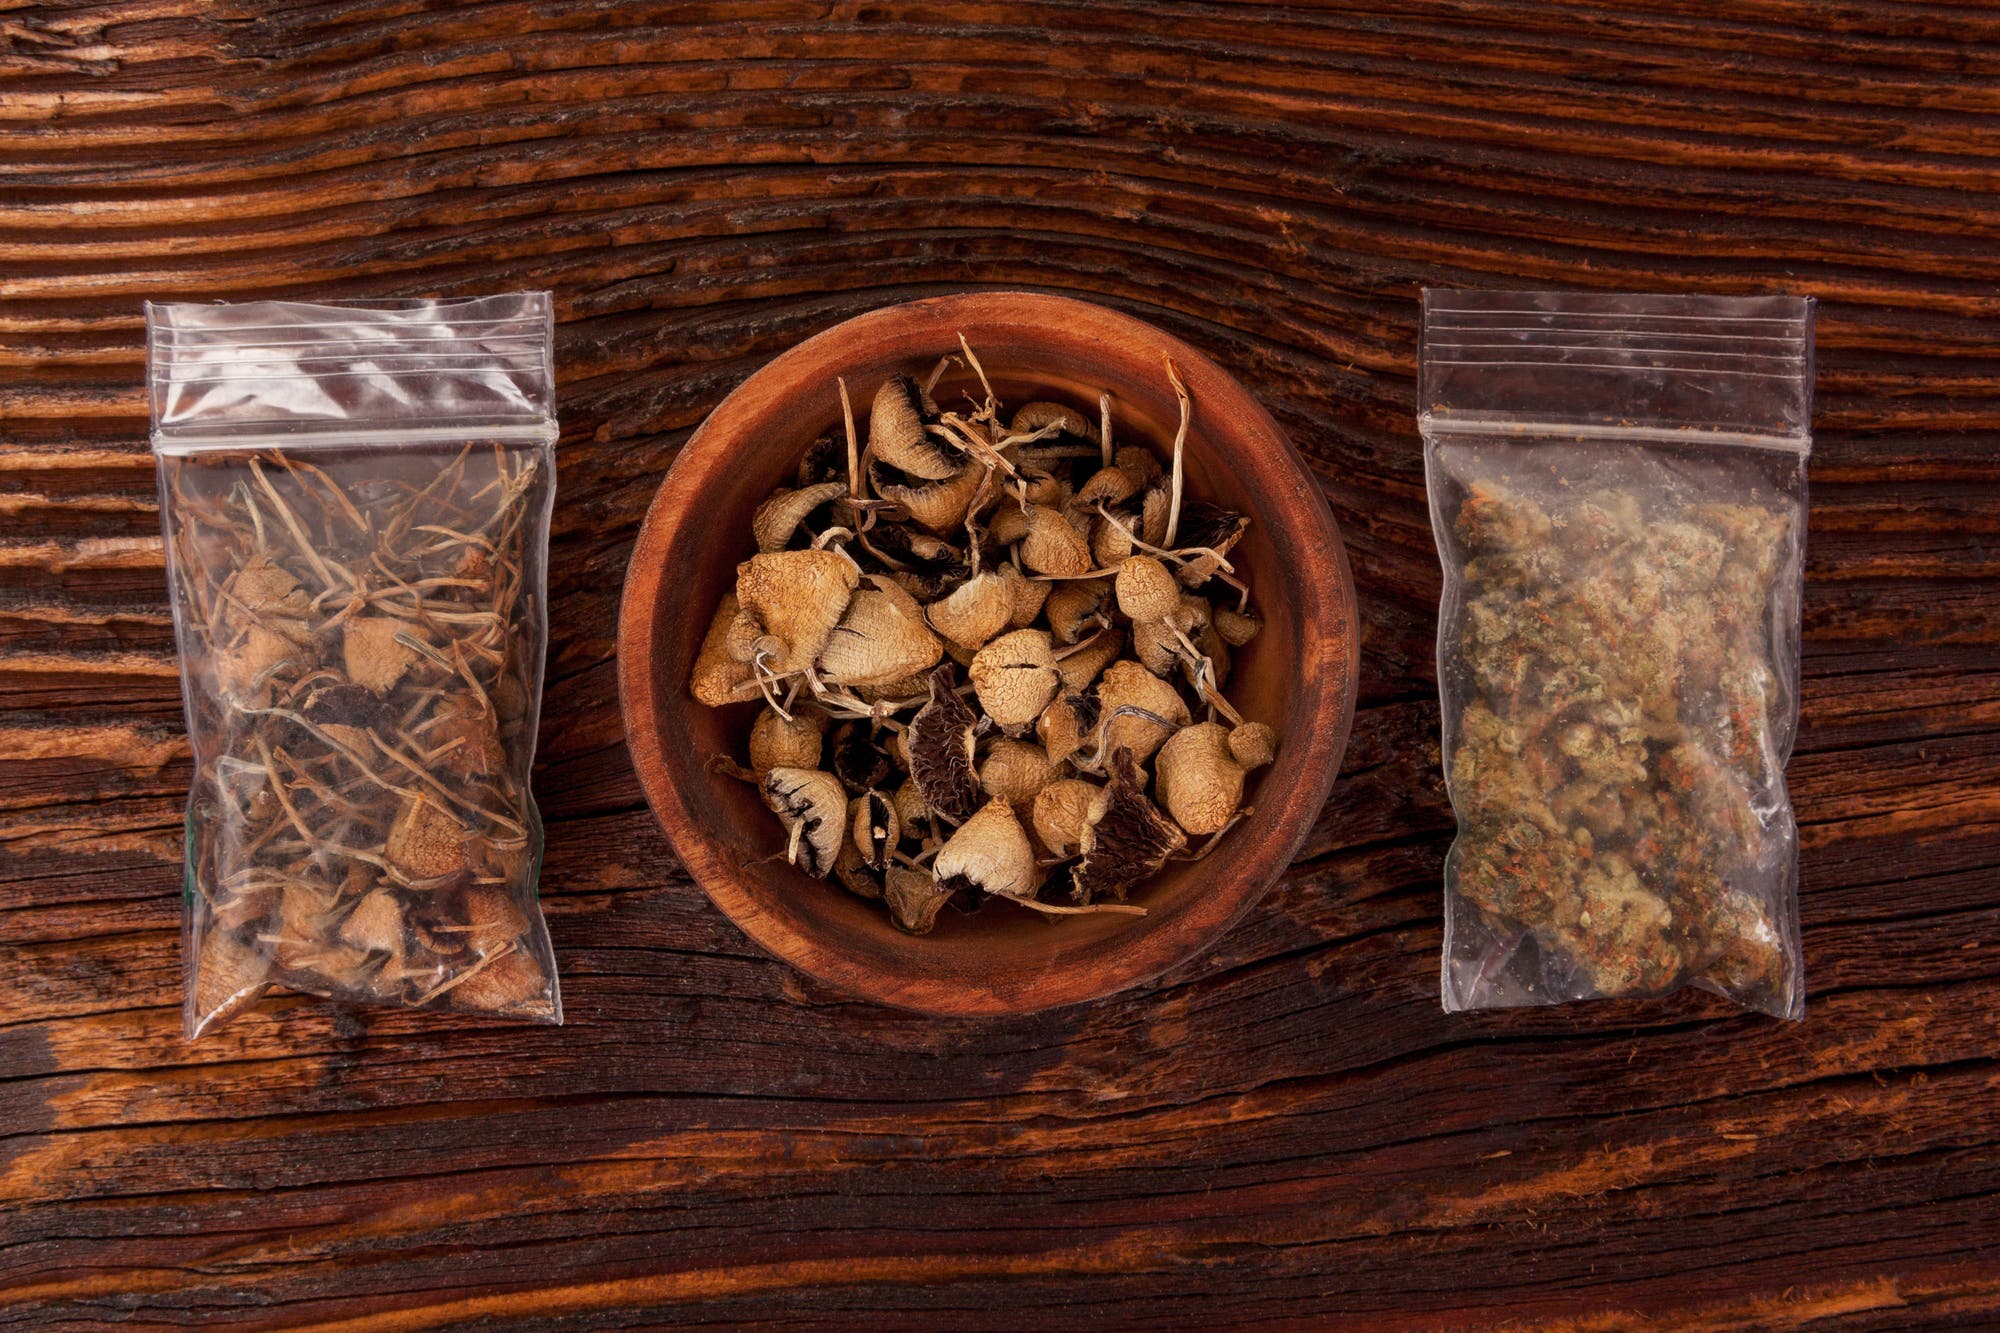 Tütchen mit getrockneten psychoaktiven Substanzen: links der spitzkegelige Kahlkopf, rechts Marihuana